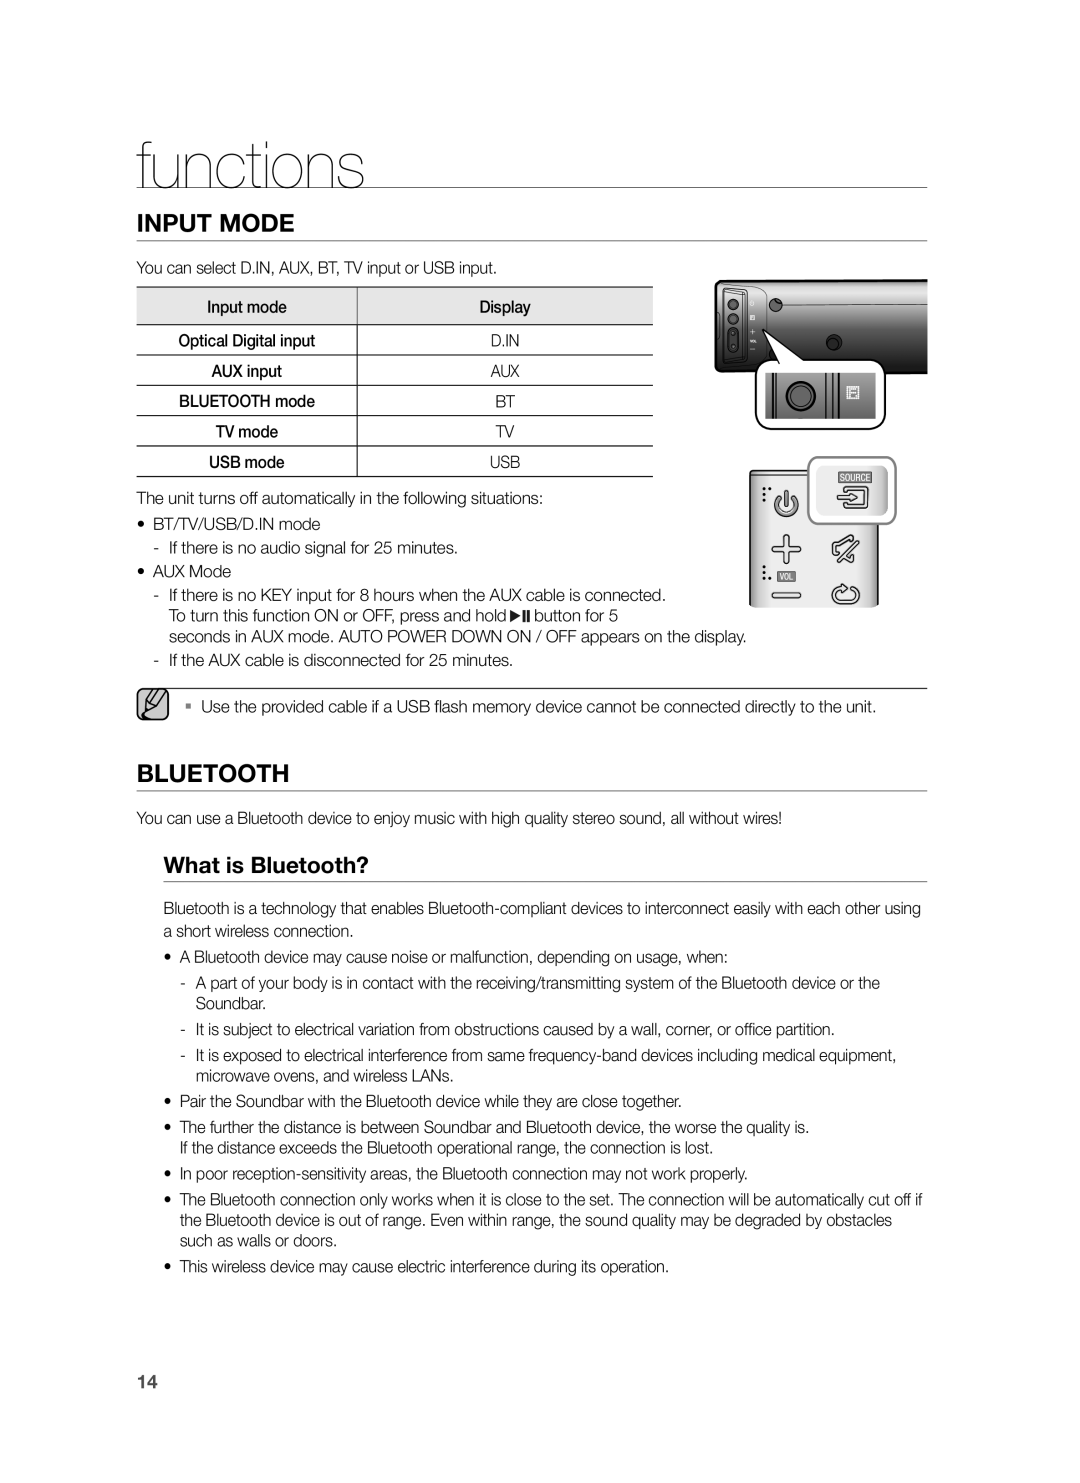 Samsung HW-H430/ZF, HW-H430/TK, HW-H430/EN manual functions, Input Mode, What is Bluetooth? 